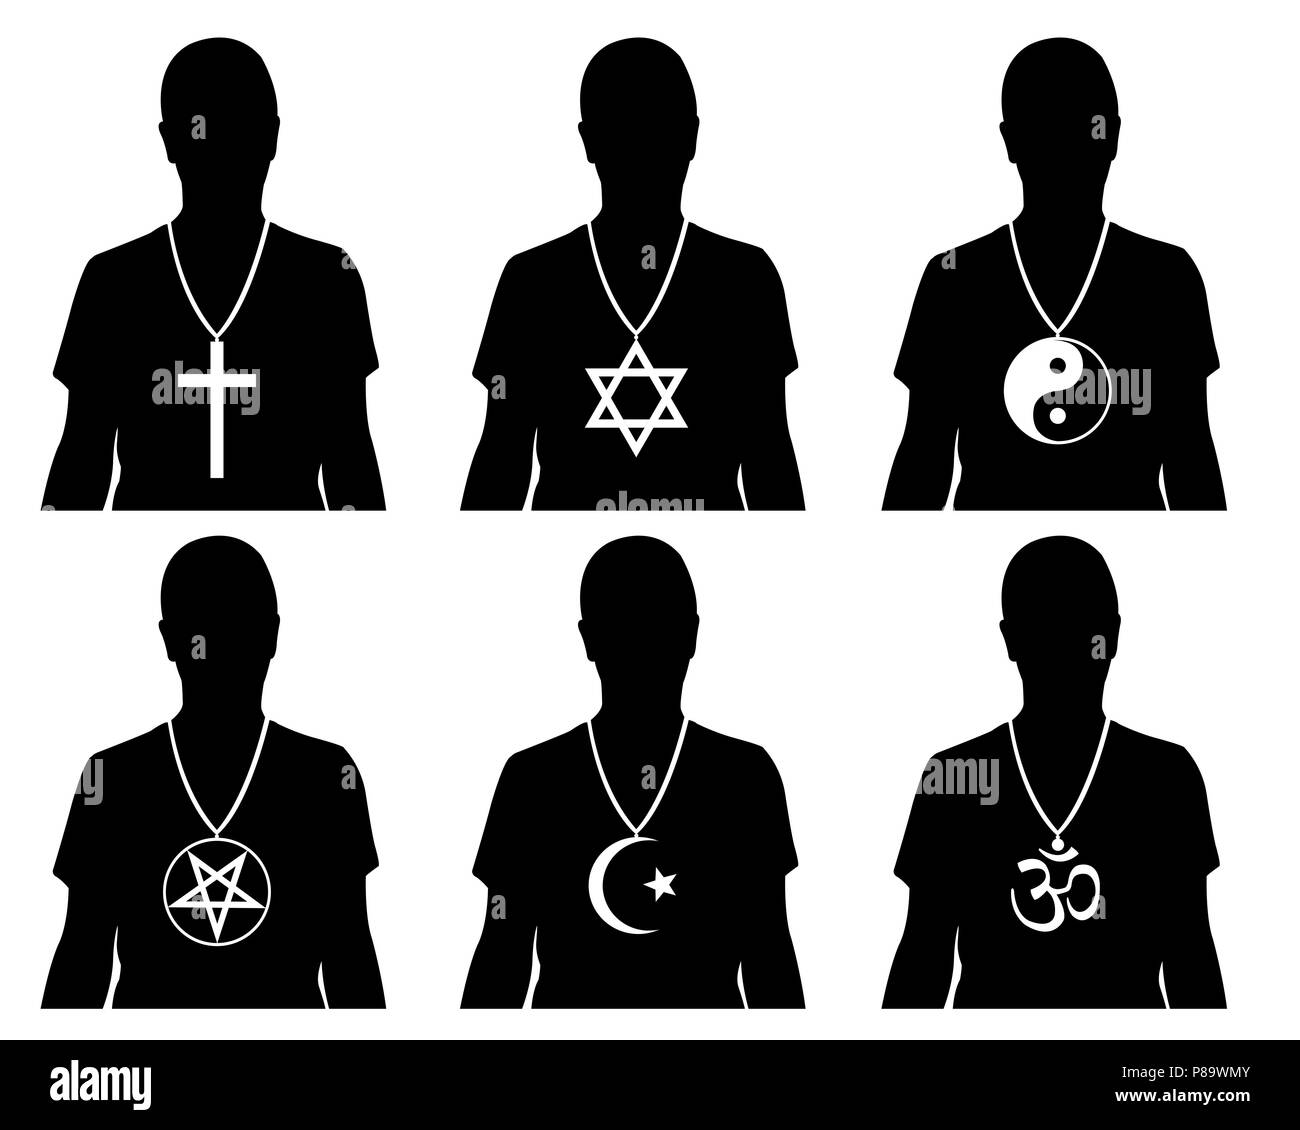 Silhouettes of men with religious symbols isolated on white Stock Photo